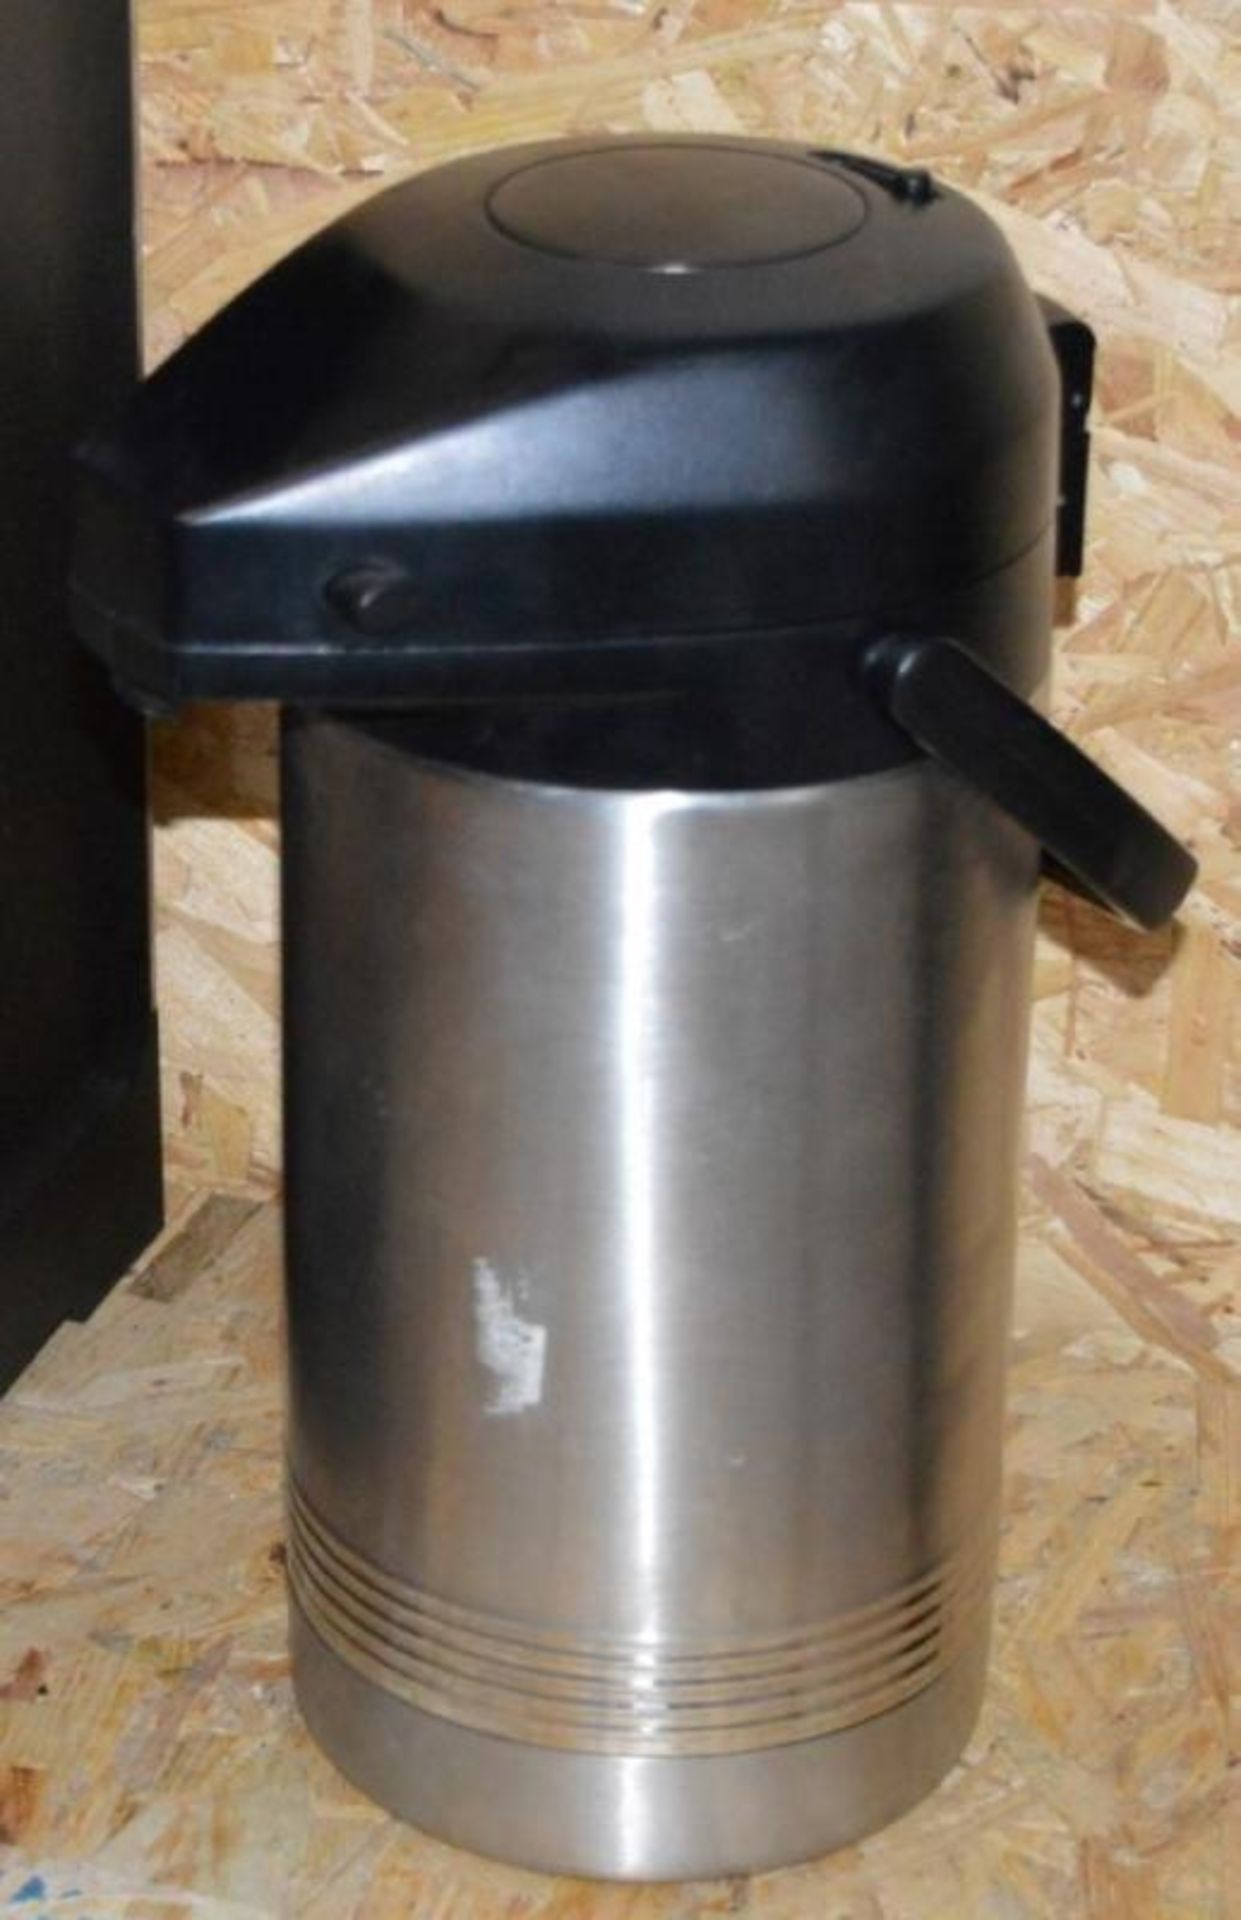 1 x Bravilor Bonamat TH Filter Coffee Machine With Emsa 3 Liter Vac Pump Coffee Pot Stainless - Image 3 of 4